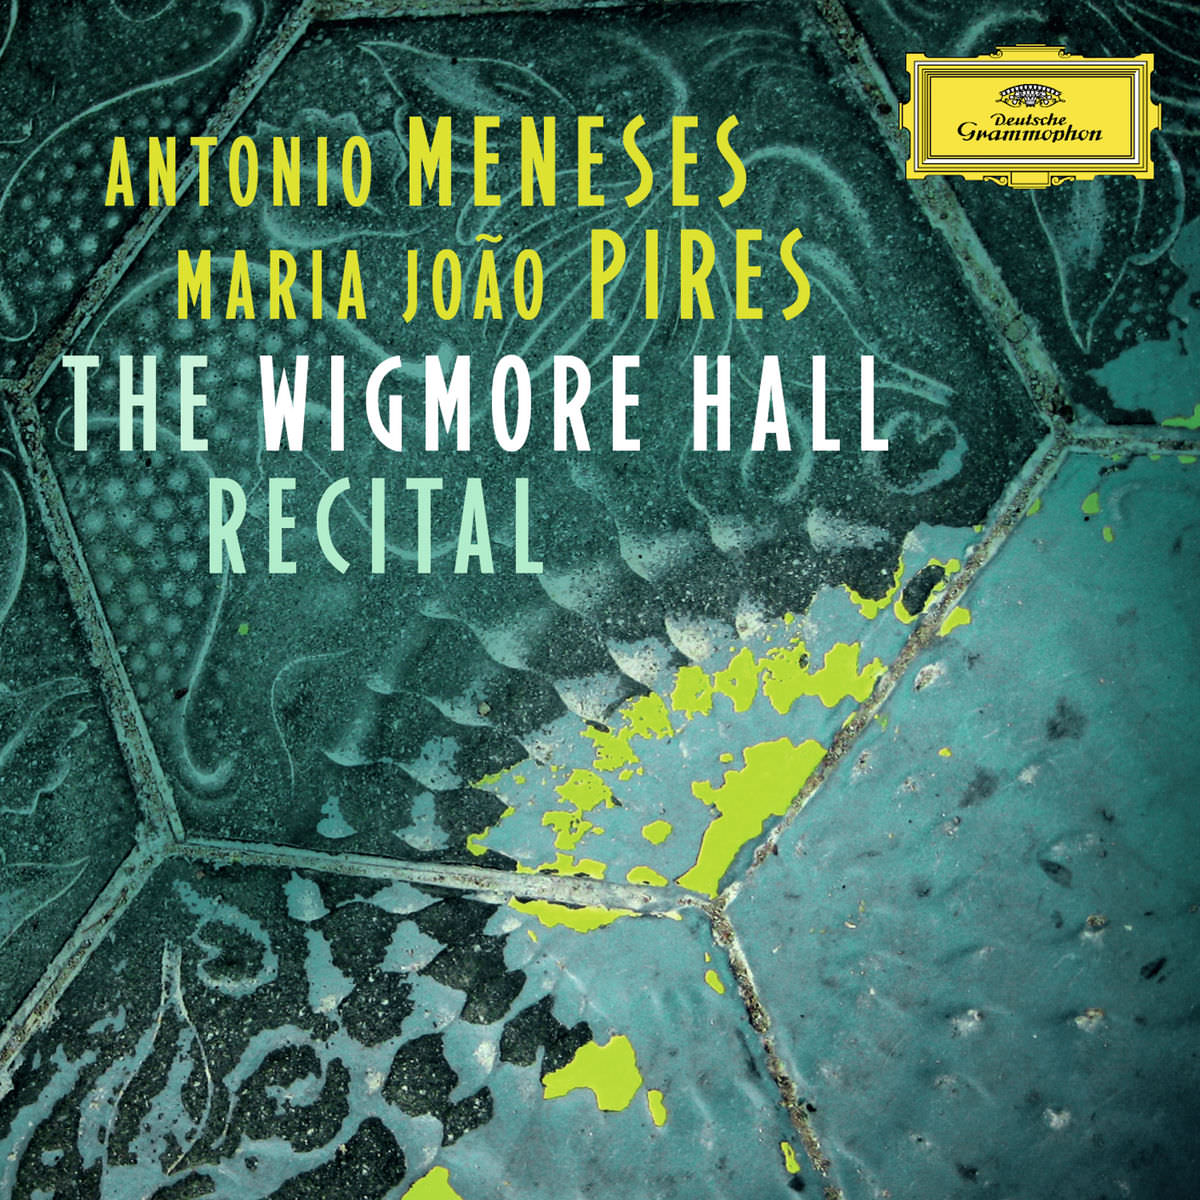 Antonio Meneses & Maria Joao Pires - The Wigmore Hall Recital (2013) [FLAC 24bit/96kHz]